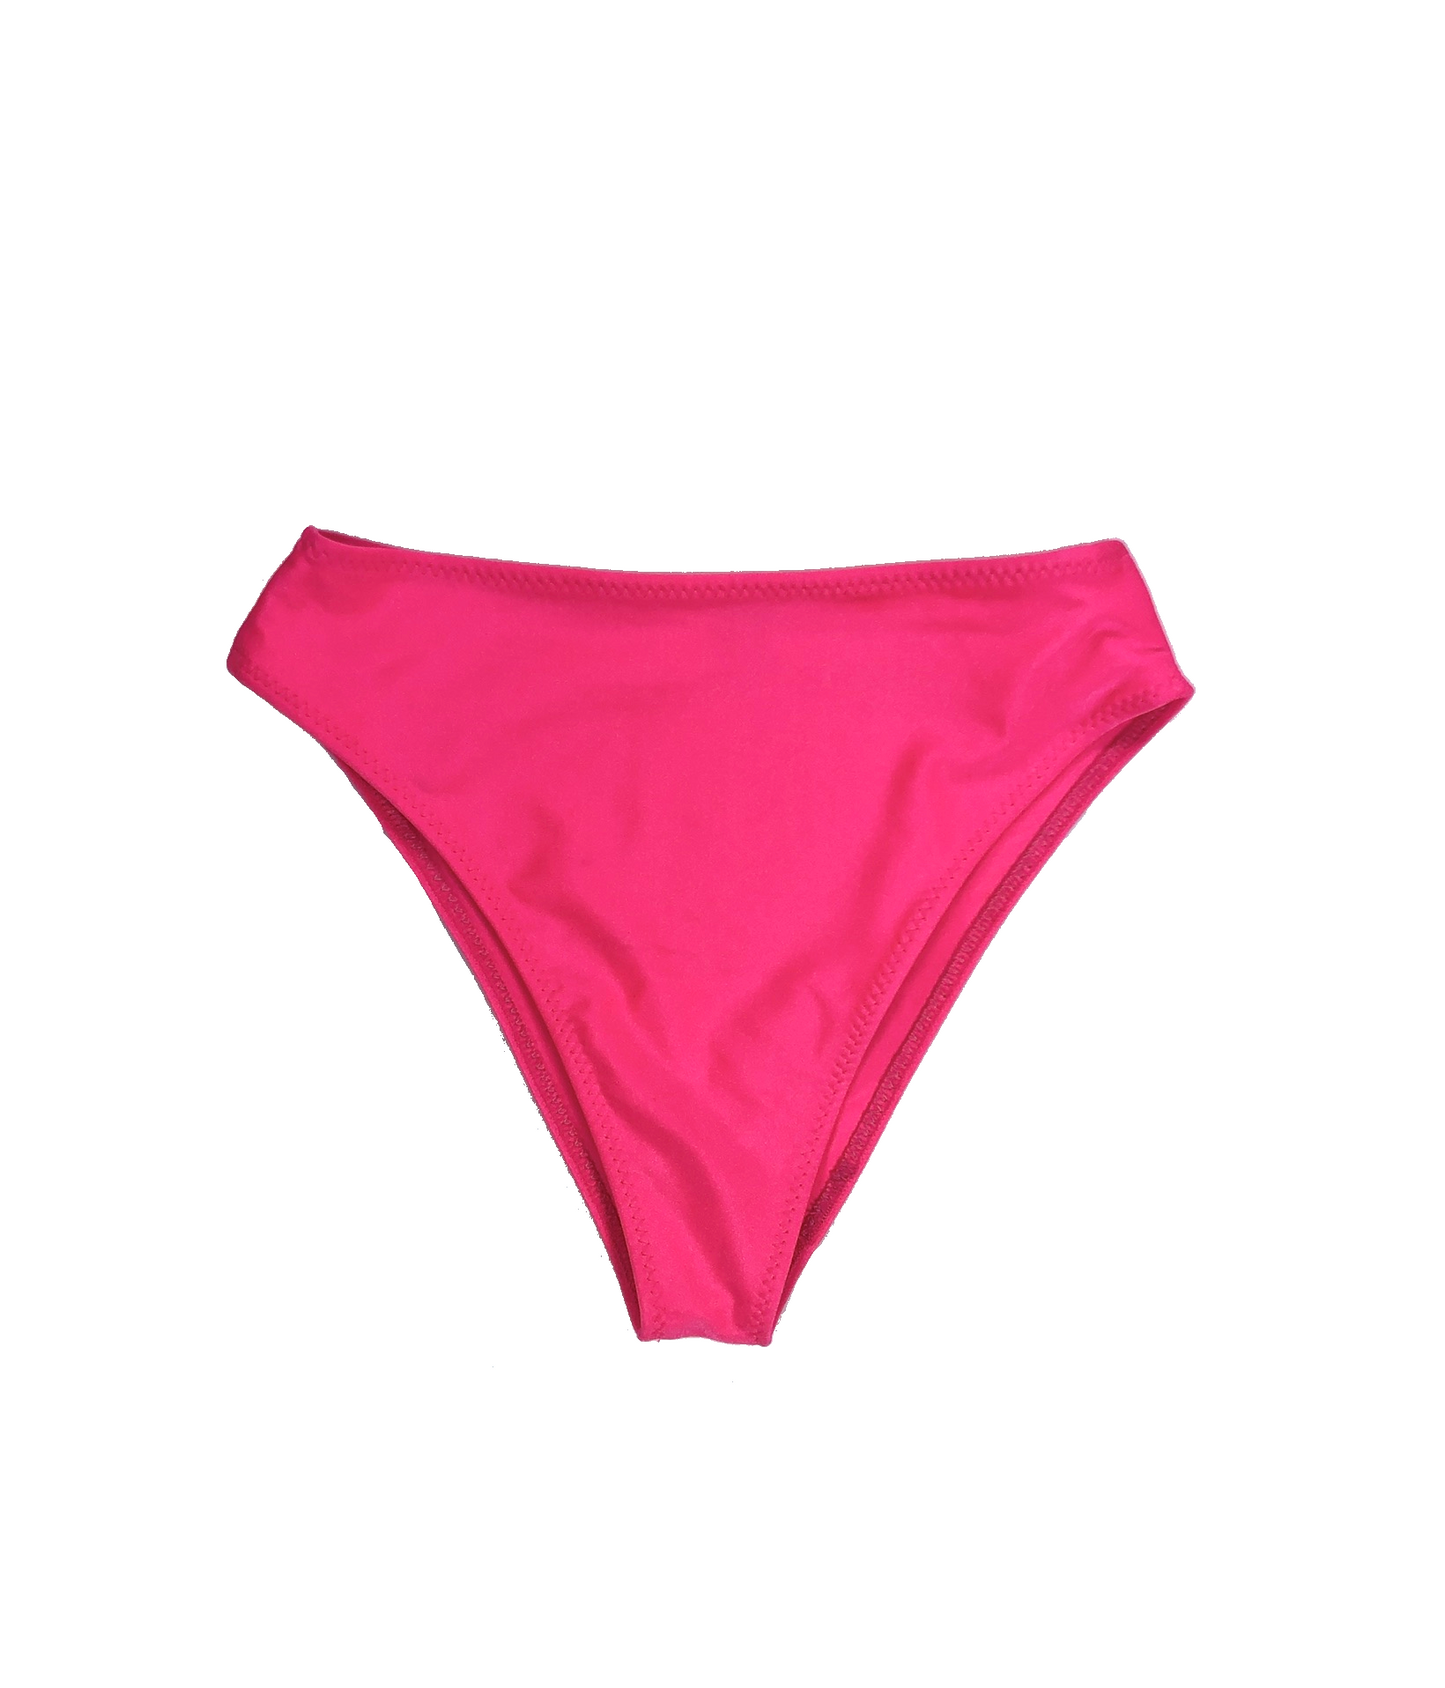 wendolin-designs - Wendolin Designs - Bikini bottom - High-Waist Full Coverage Bikini Bottom Color Neon Pink